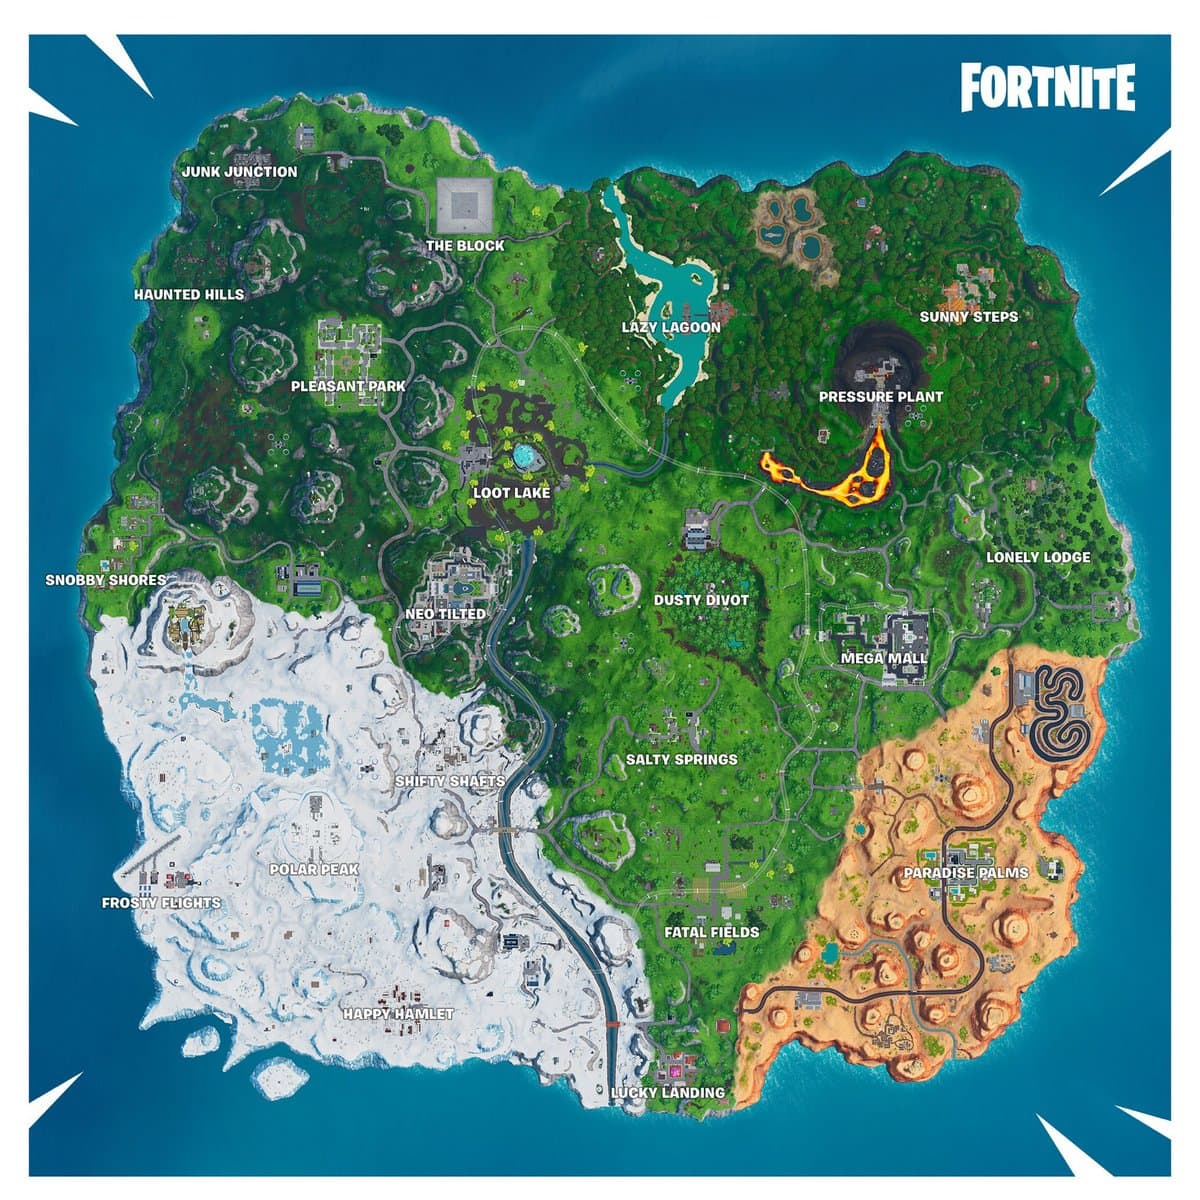 Fortnite season 9 map changes